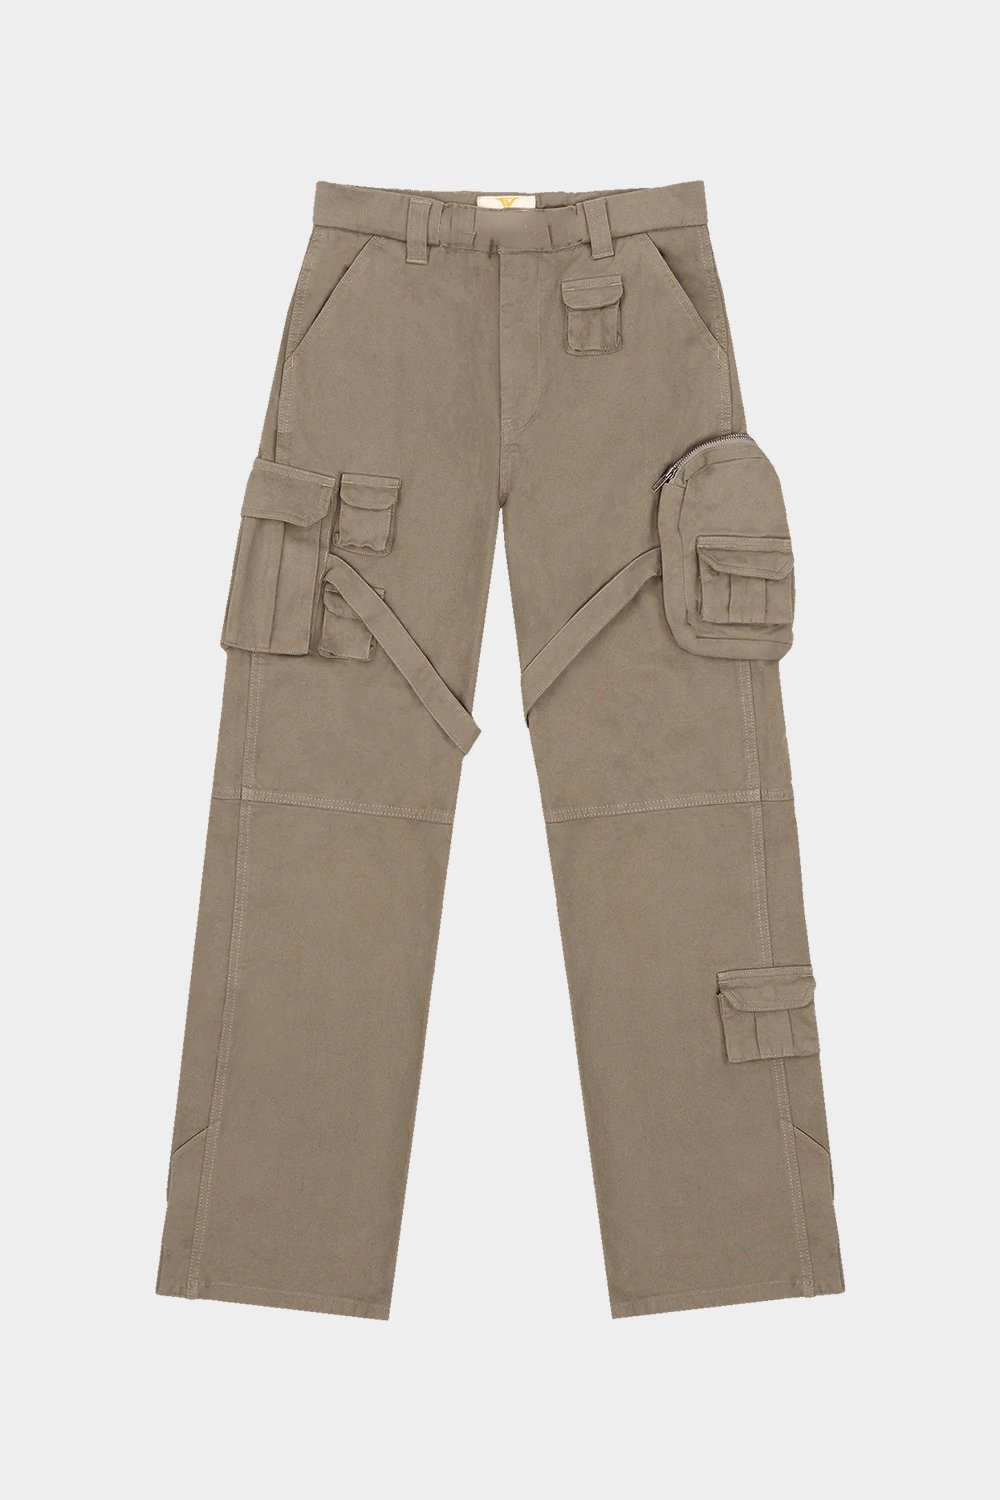 Sand Bondage Cargo Pants (TVS10)